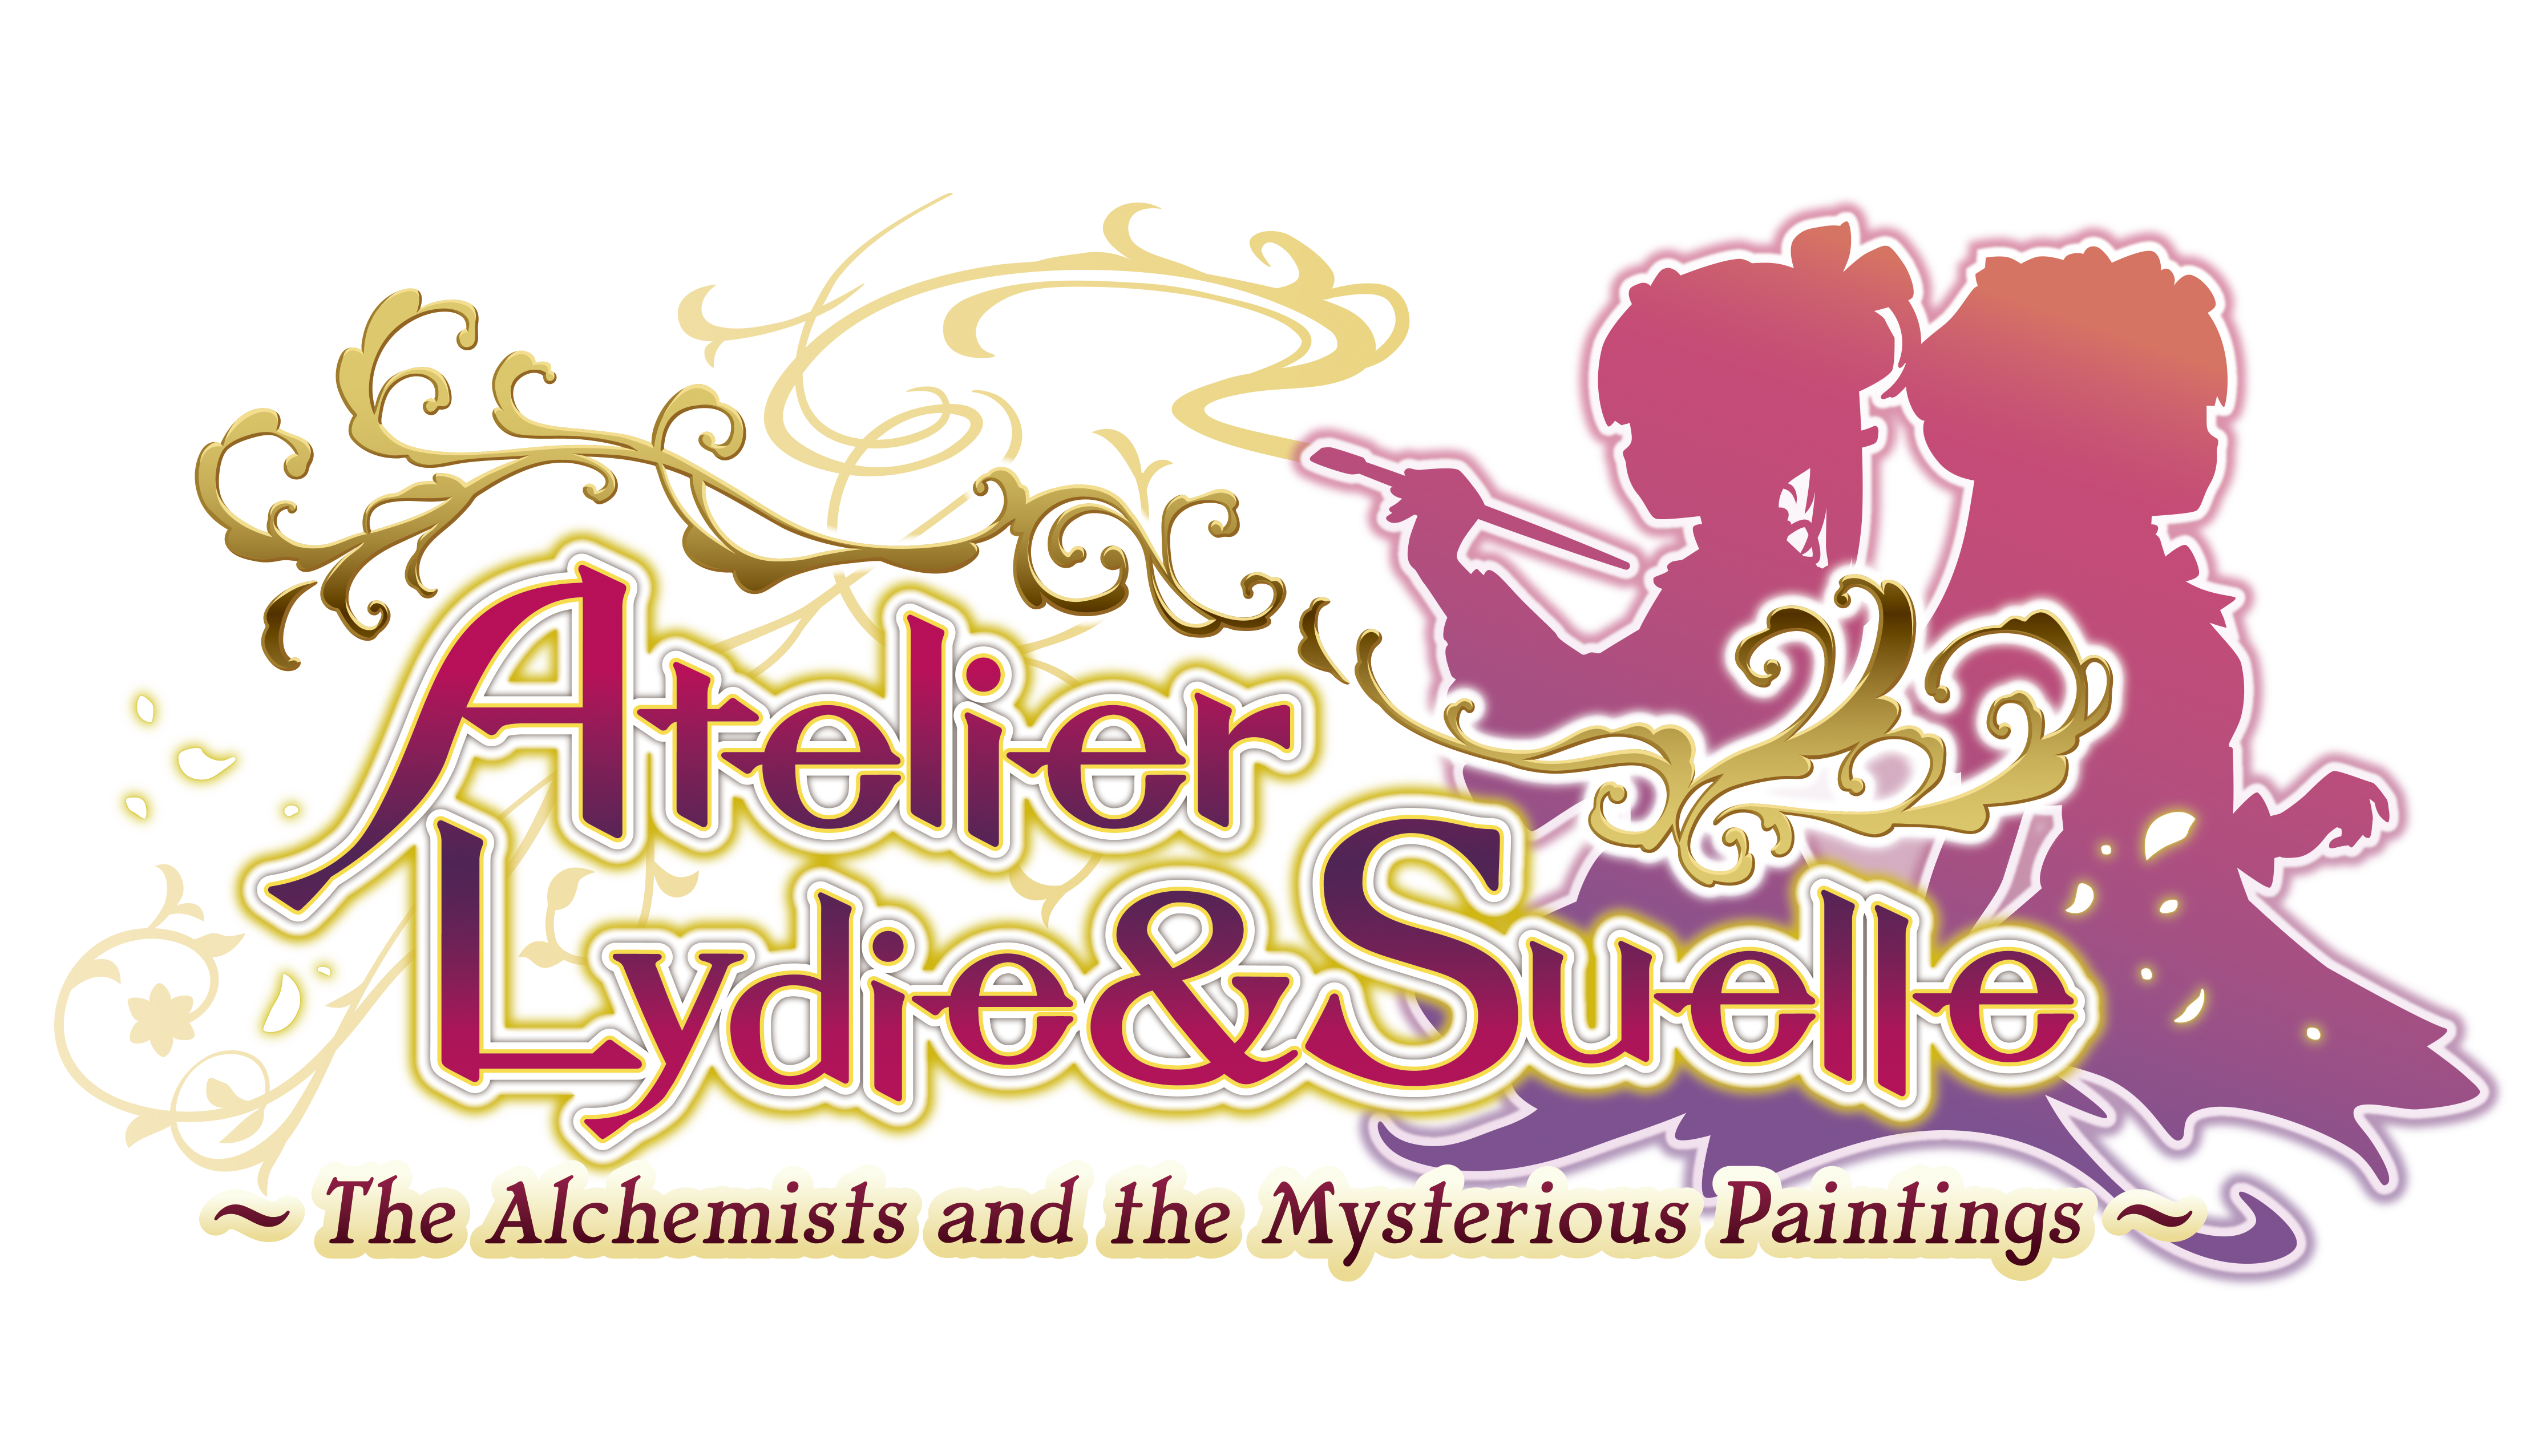 Atelier Lydie & Suelle logo